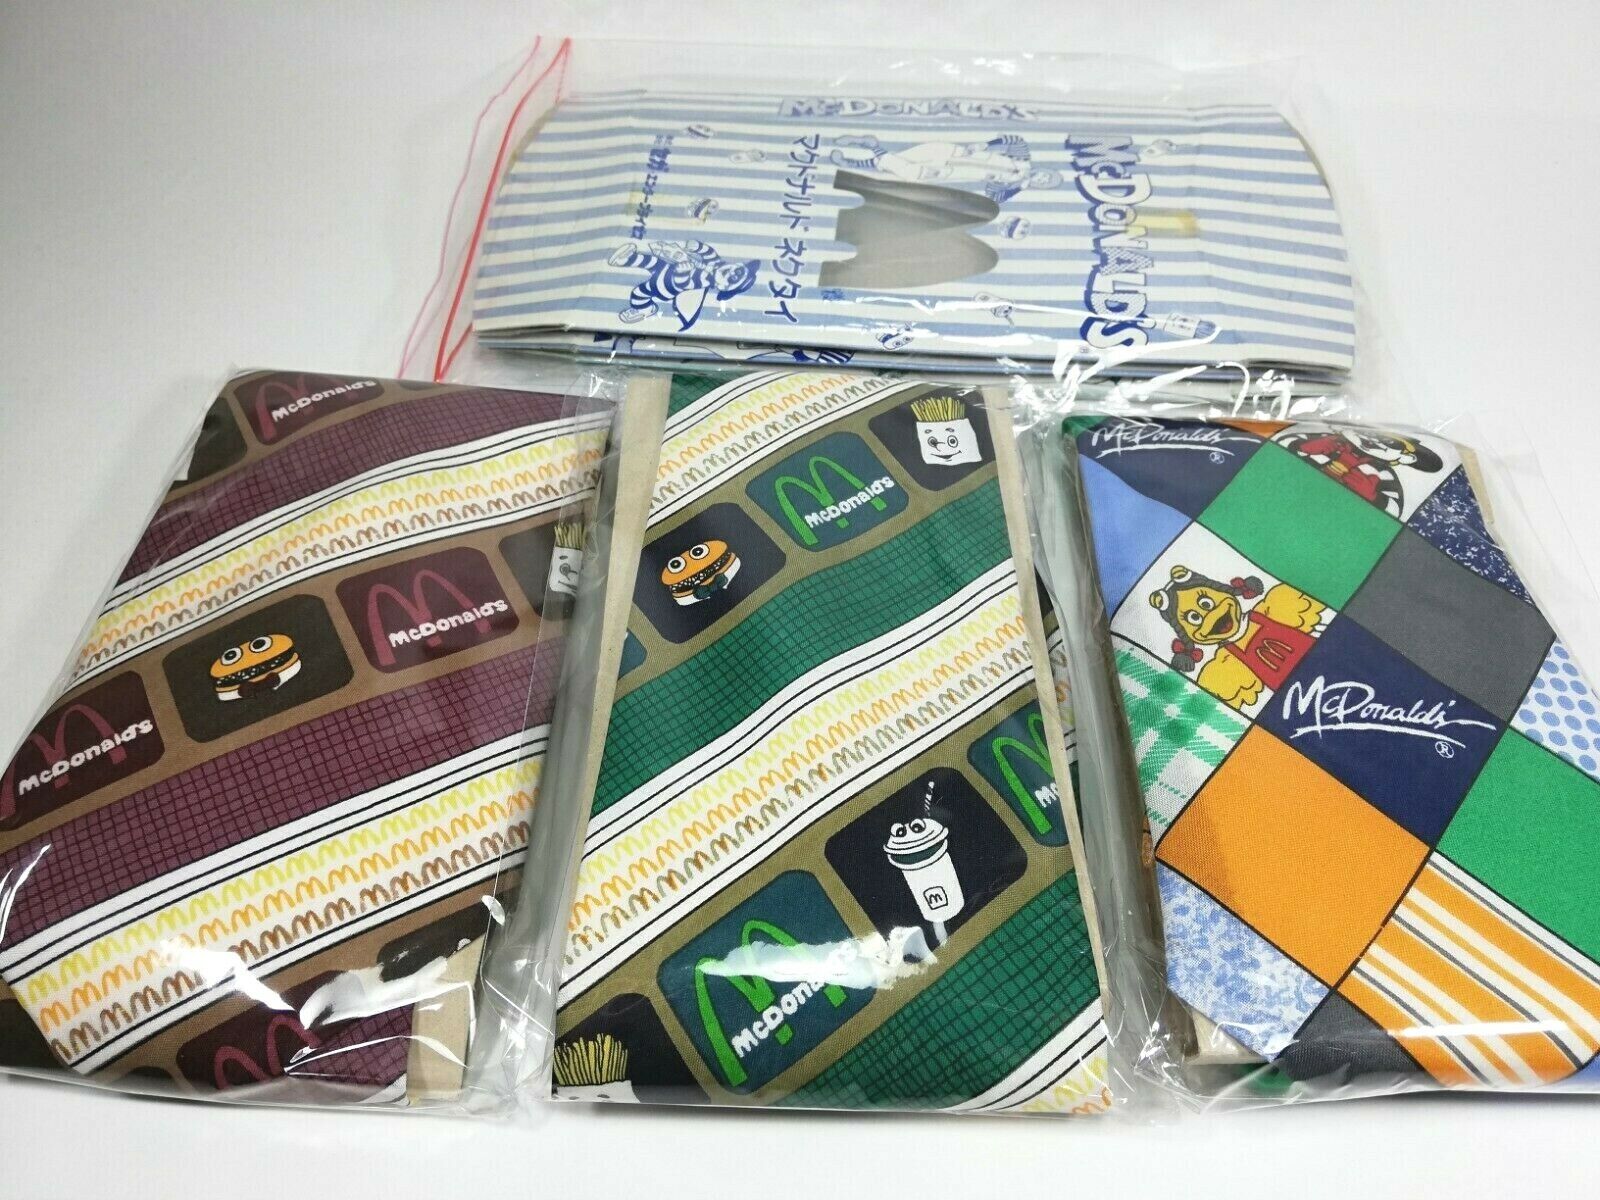 Vintage Mcdonalds neckties - Sega Japan 1995 - Set of 3 